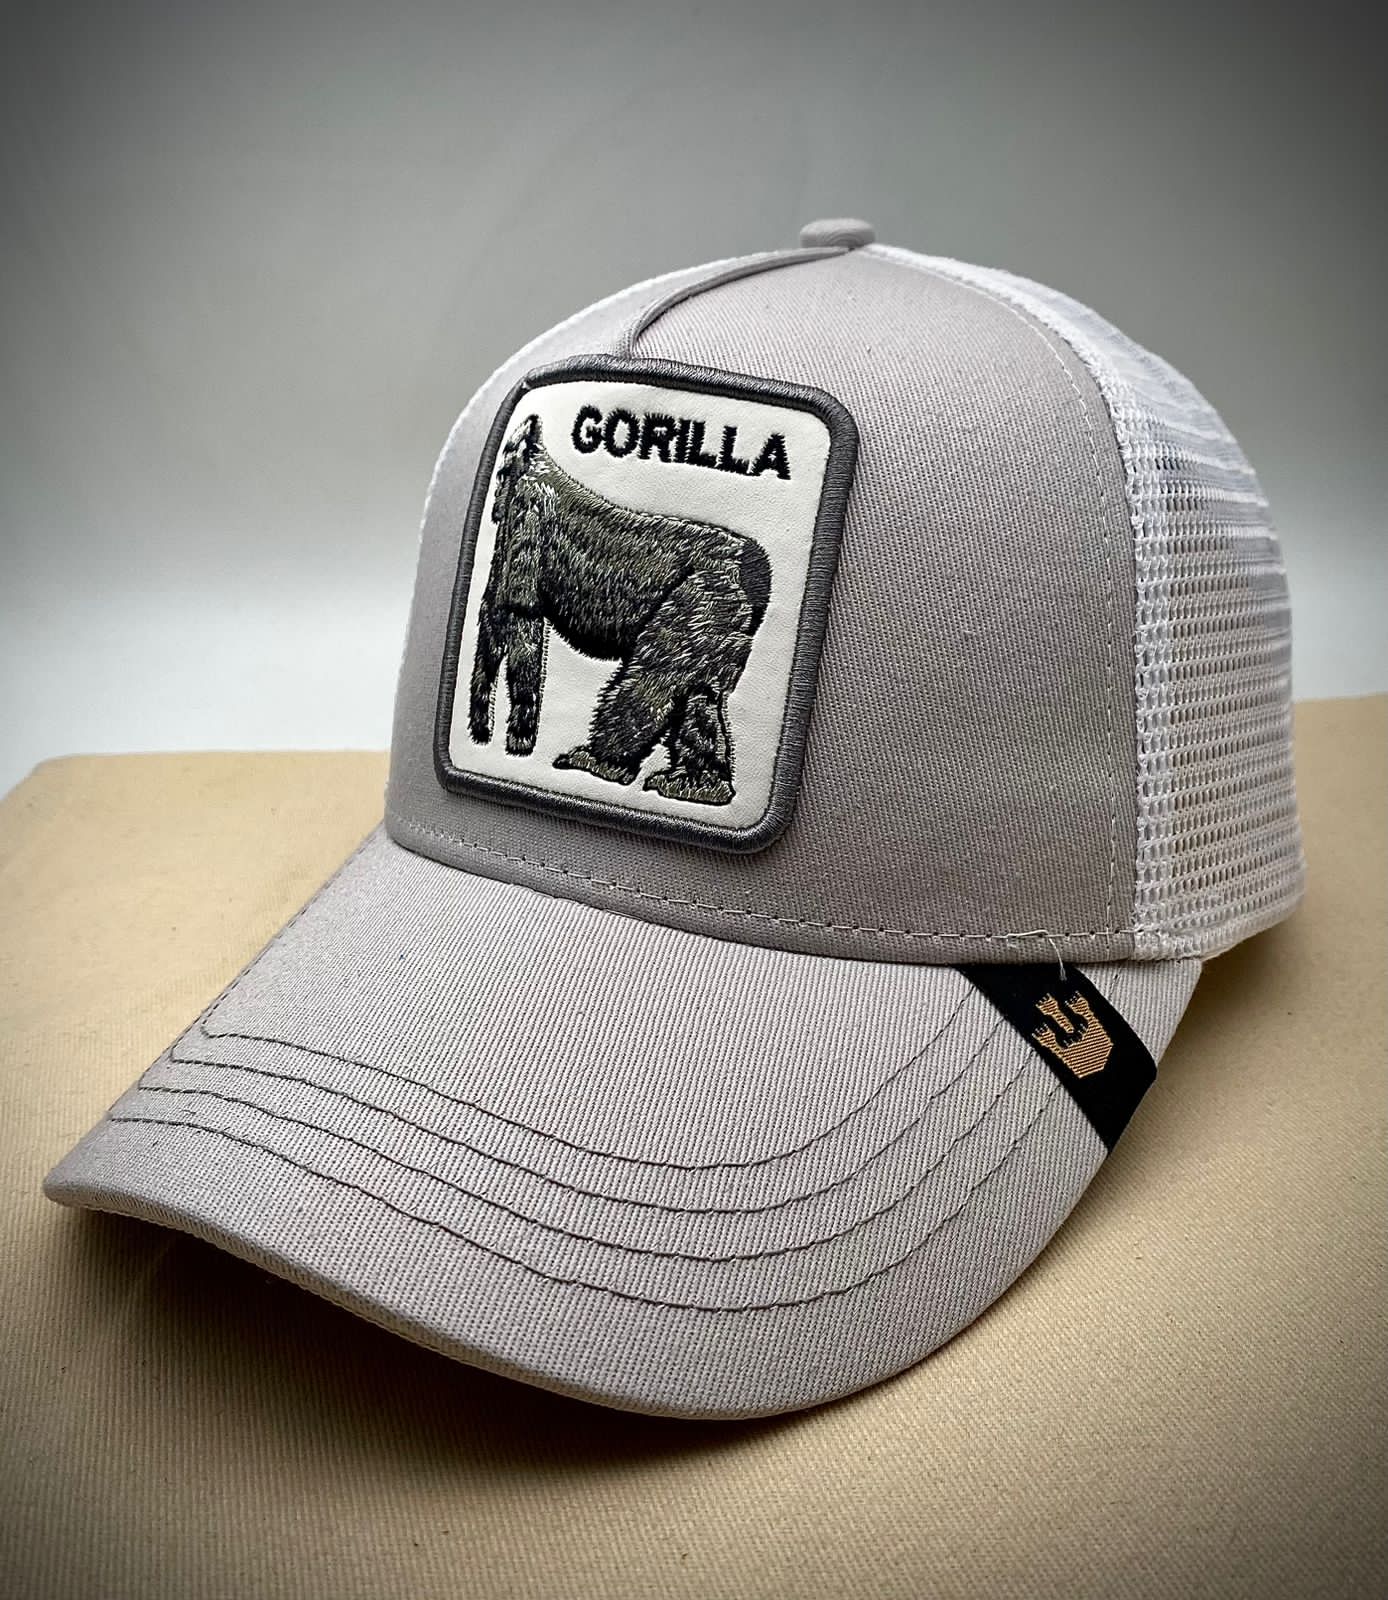 Gorra goorin Bross gris gorilla